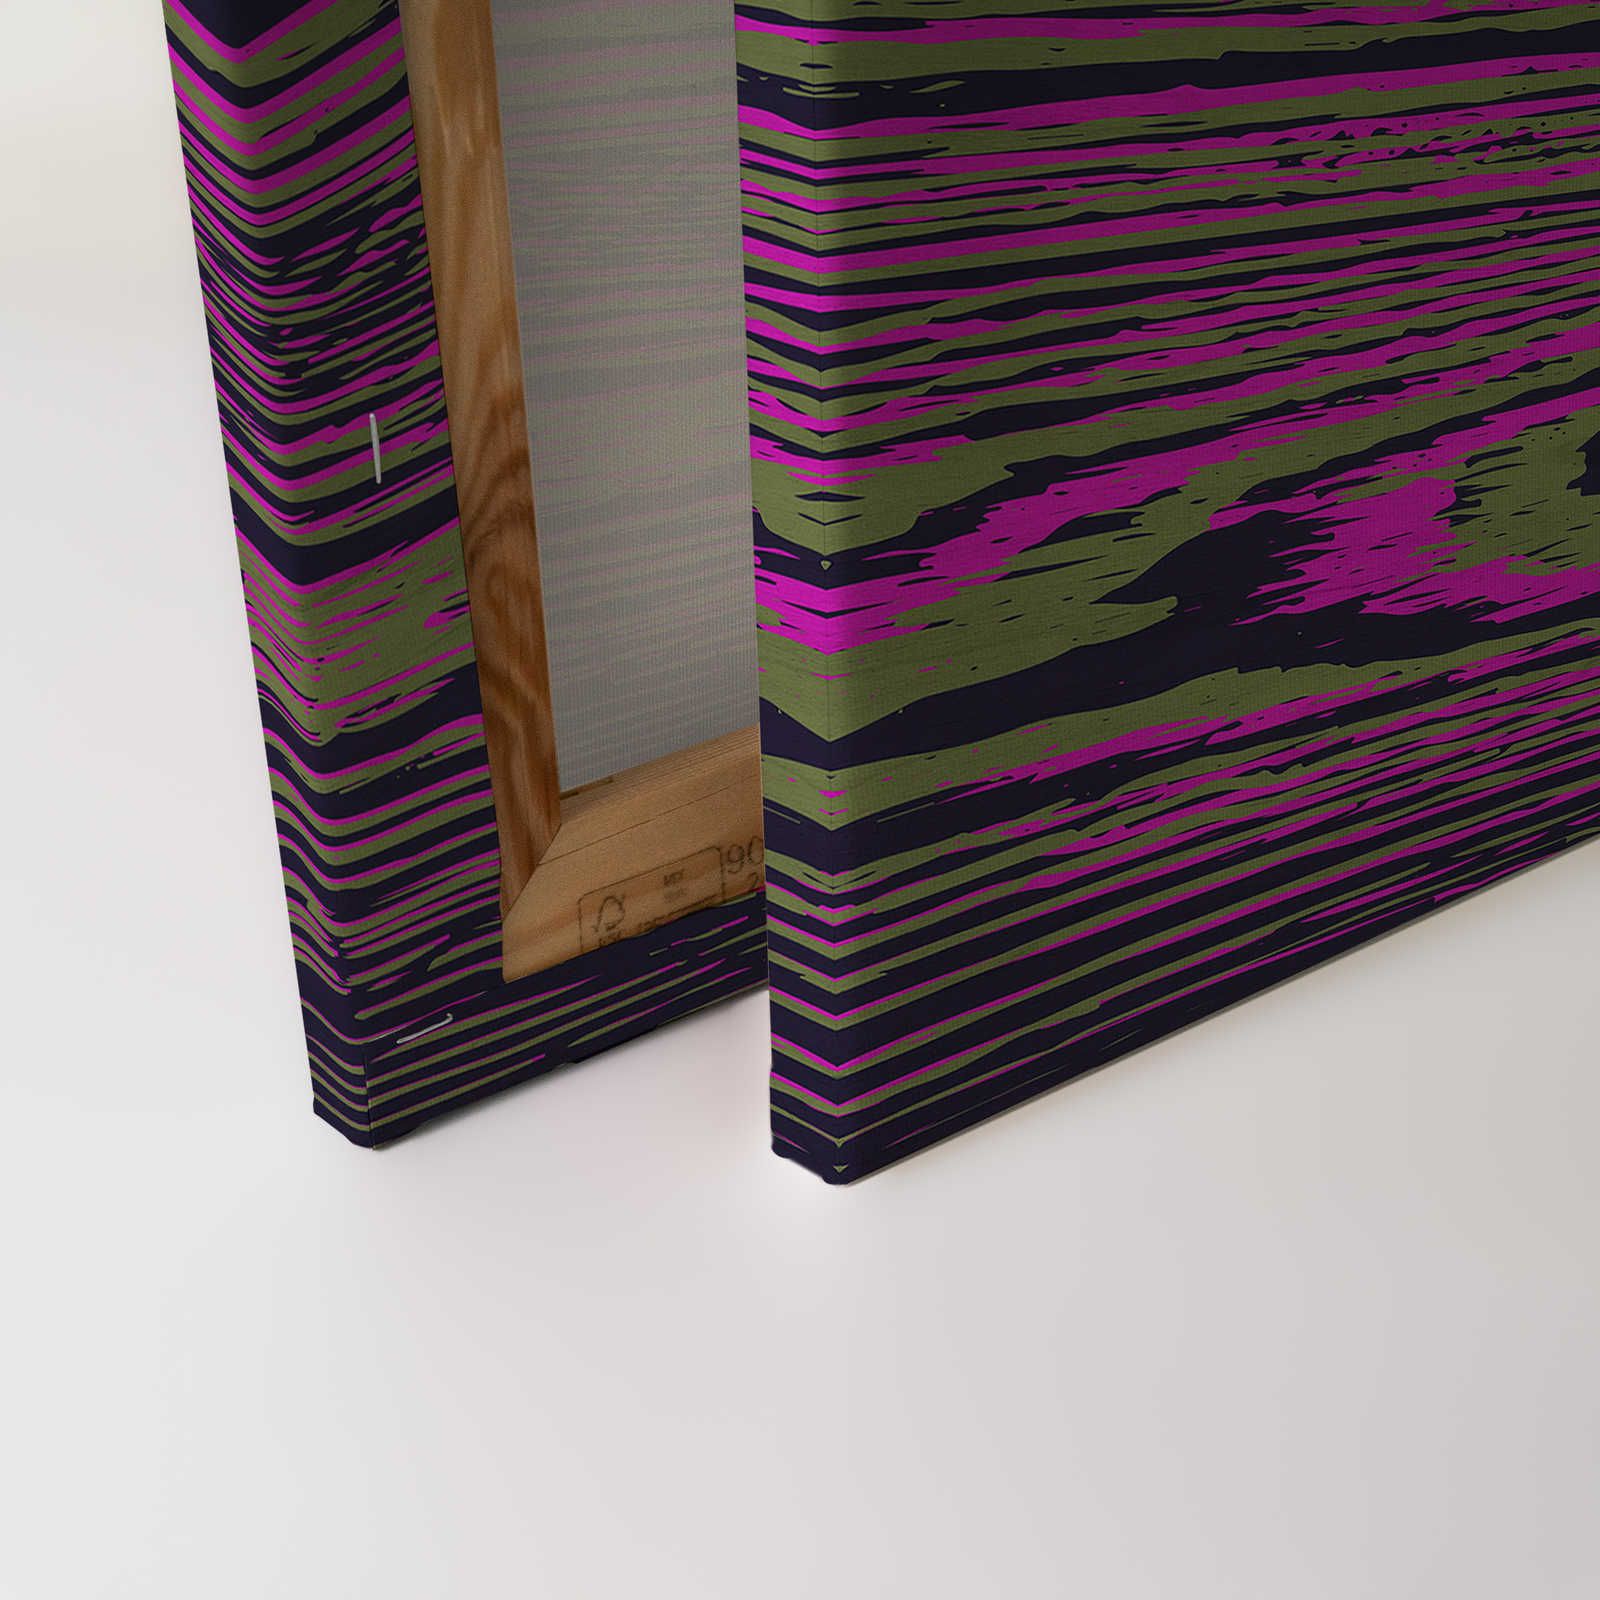             Kontiki 2 - Canvas painting Neon Wood Grain, Pink & Black - 0.90 m x 0.60 m
        